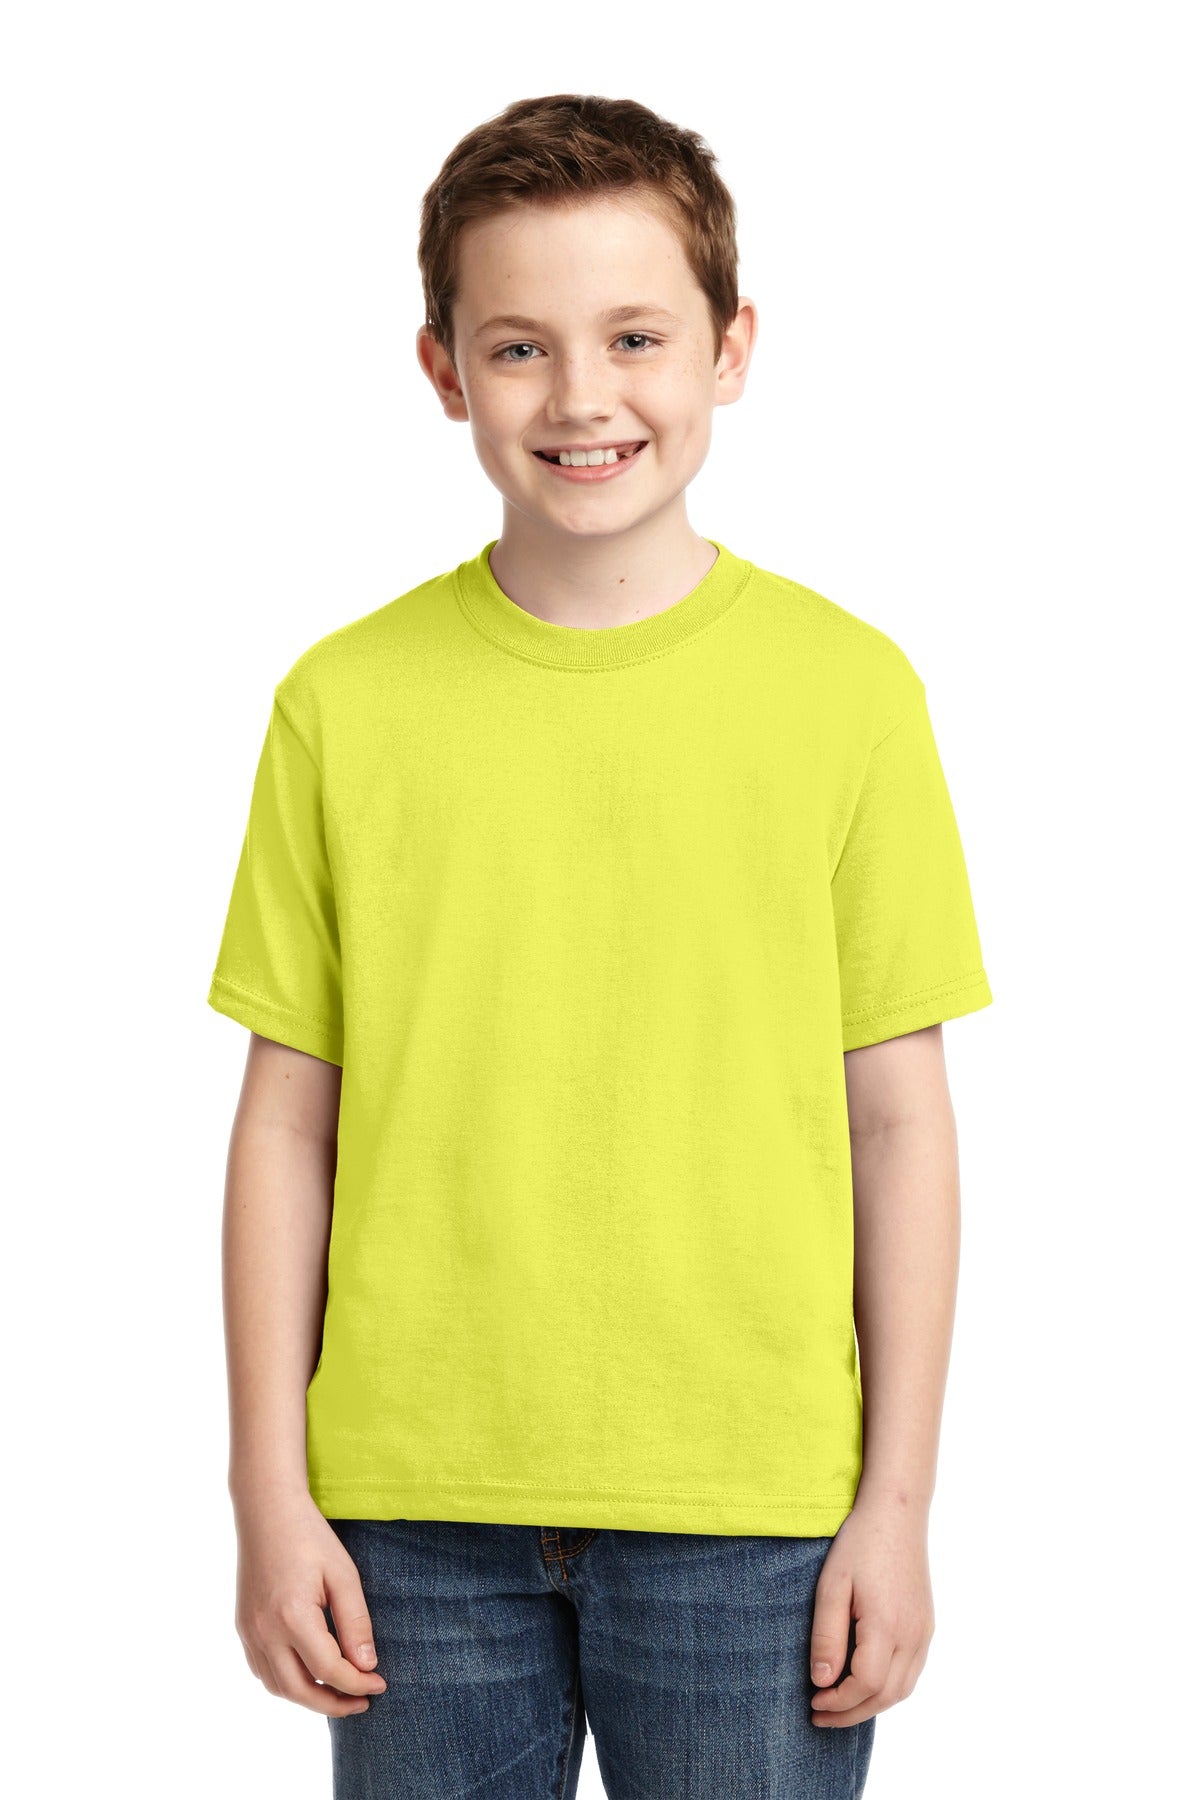 JERZEES® - Youth Dri-Power® 50/50 Cotton/Poly T-Shirt. 29B [Neon Yellow] - DFW Impression